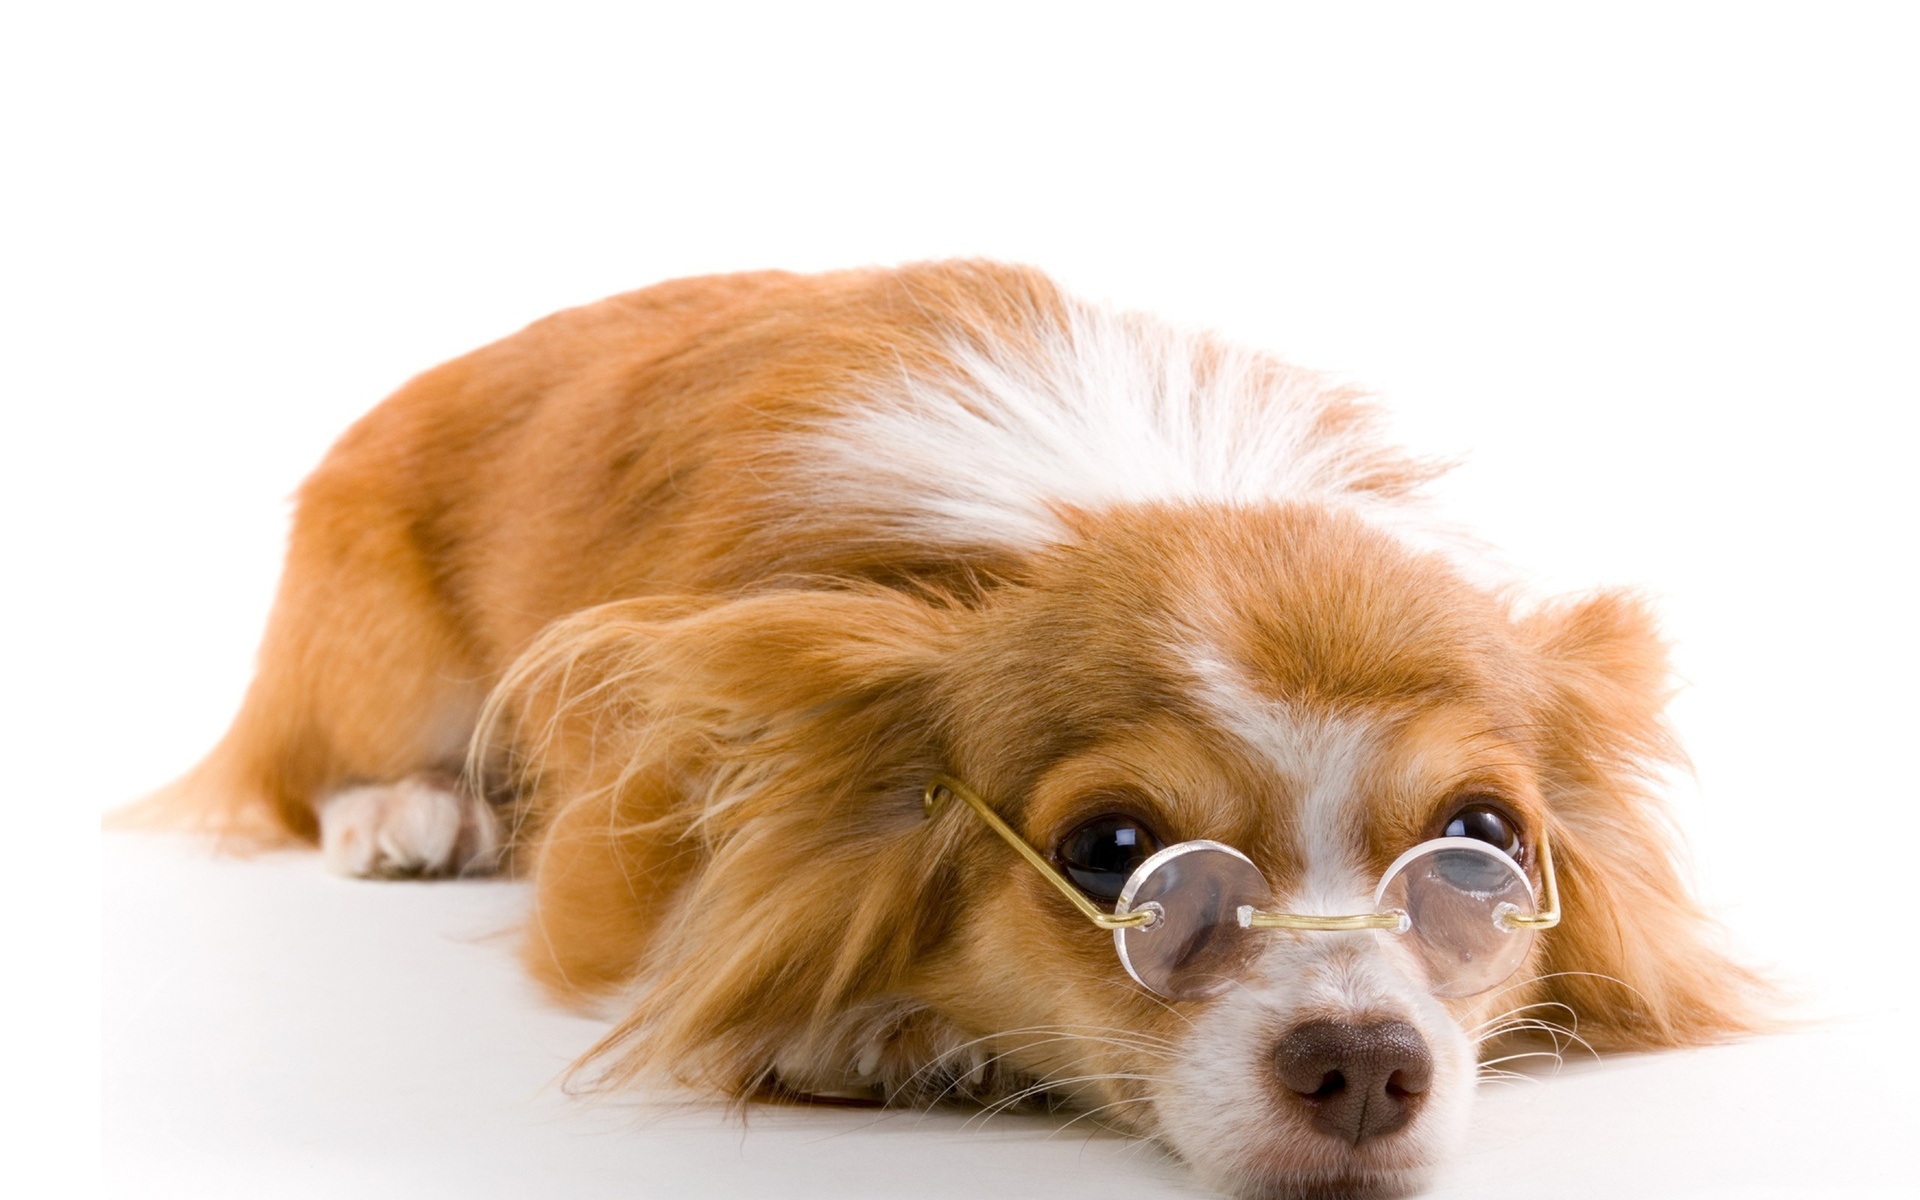 dog-wearing-glasses-animal-hd-wallpaper-1920x1200-25378.jpg